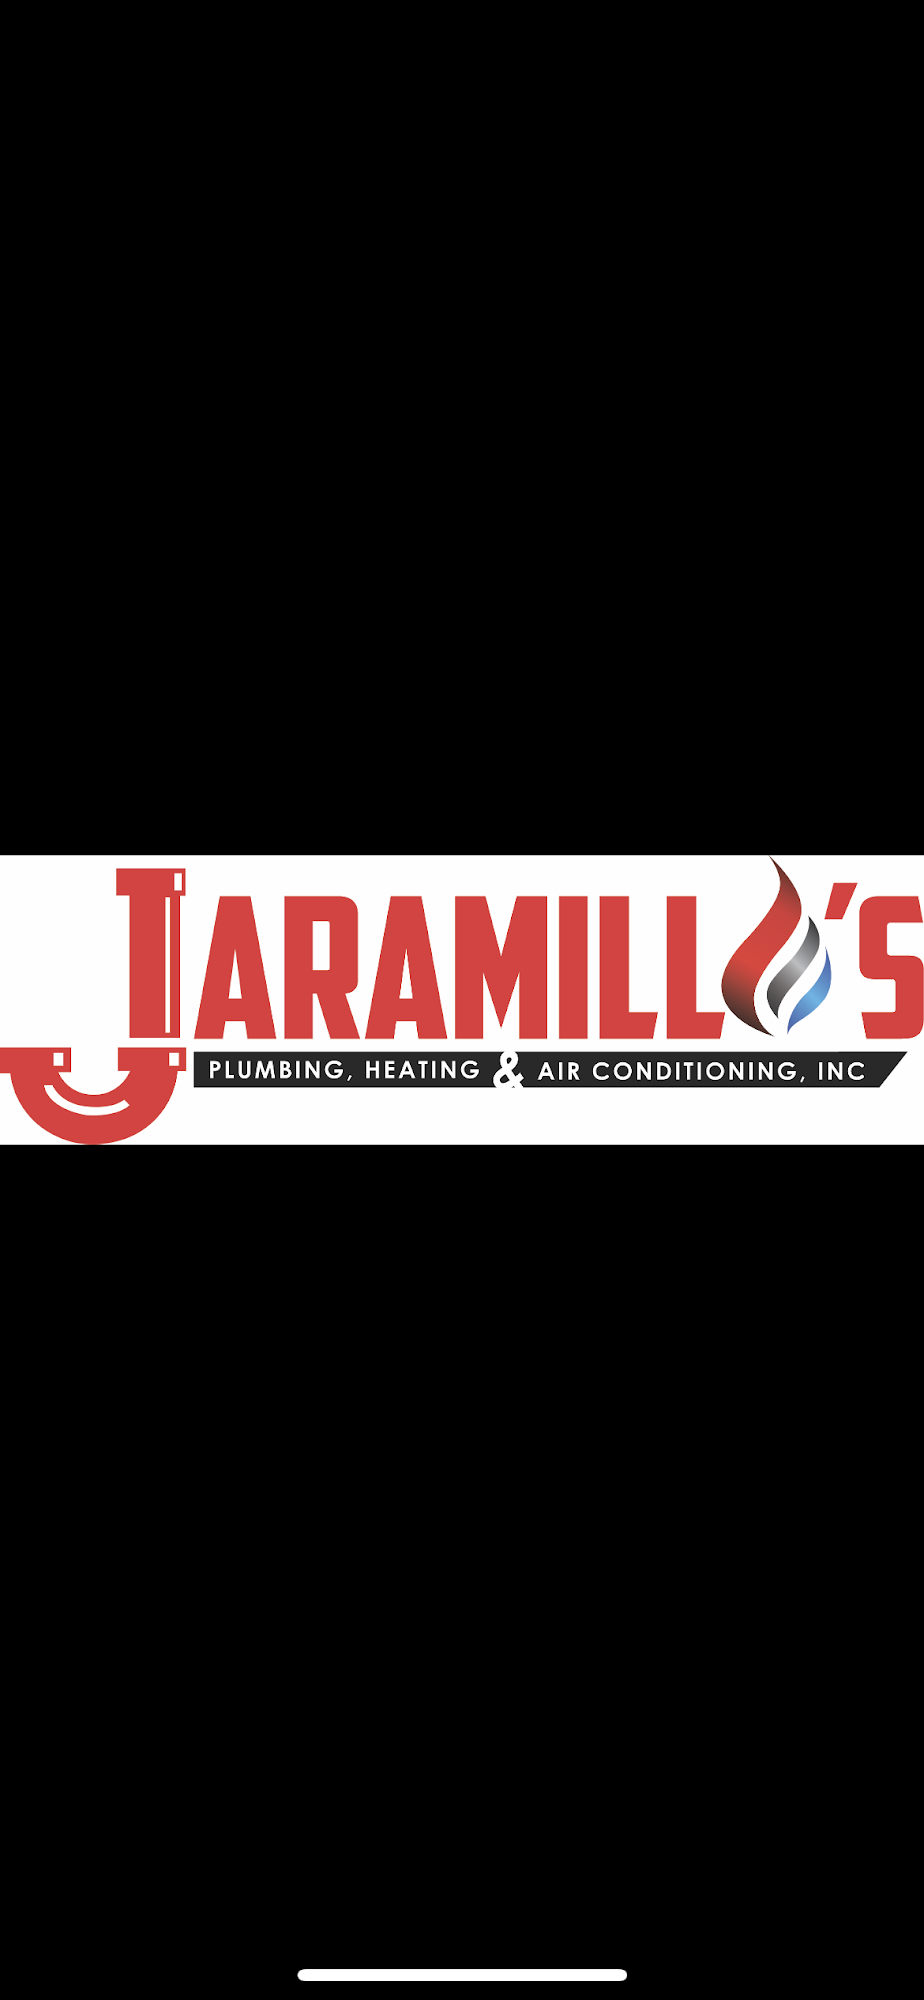 Jaramillo's Plumbing Heating & Air conditioning INC 302 Otero Ave E, Socorro New Mexico 87801